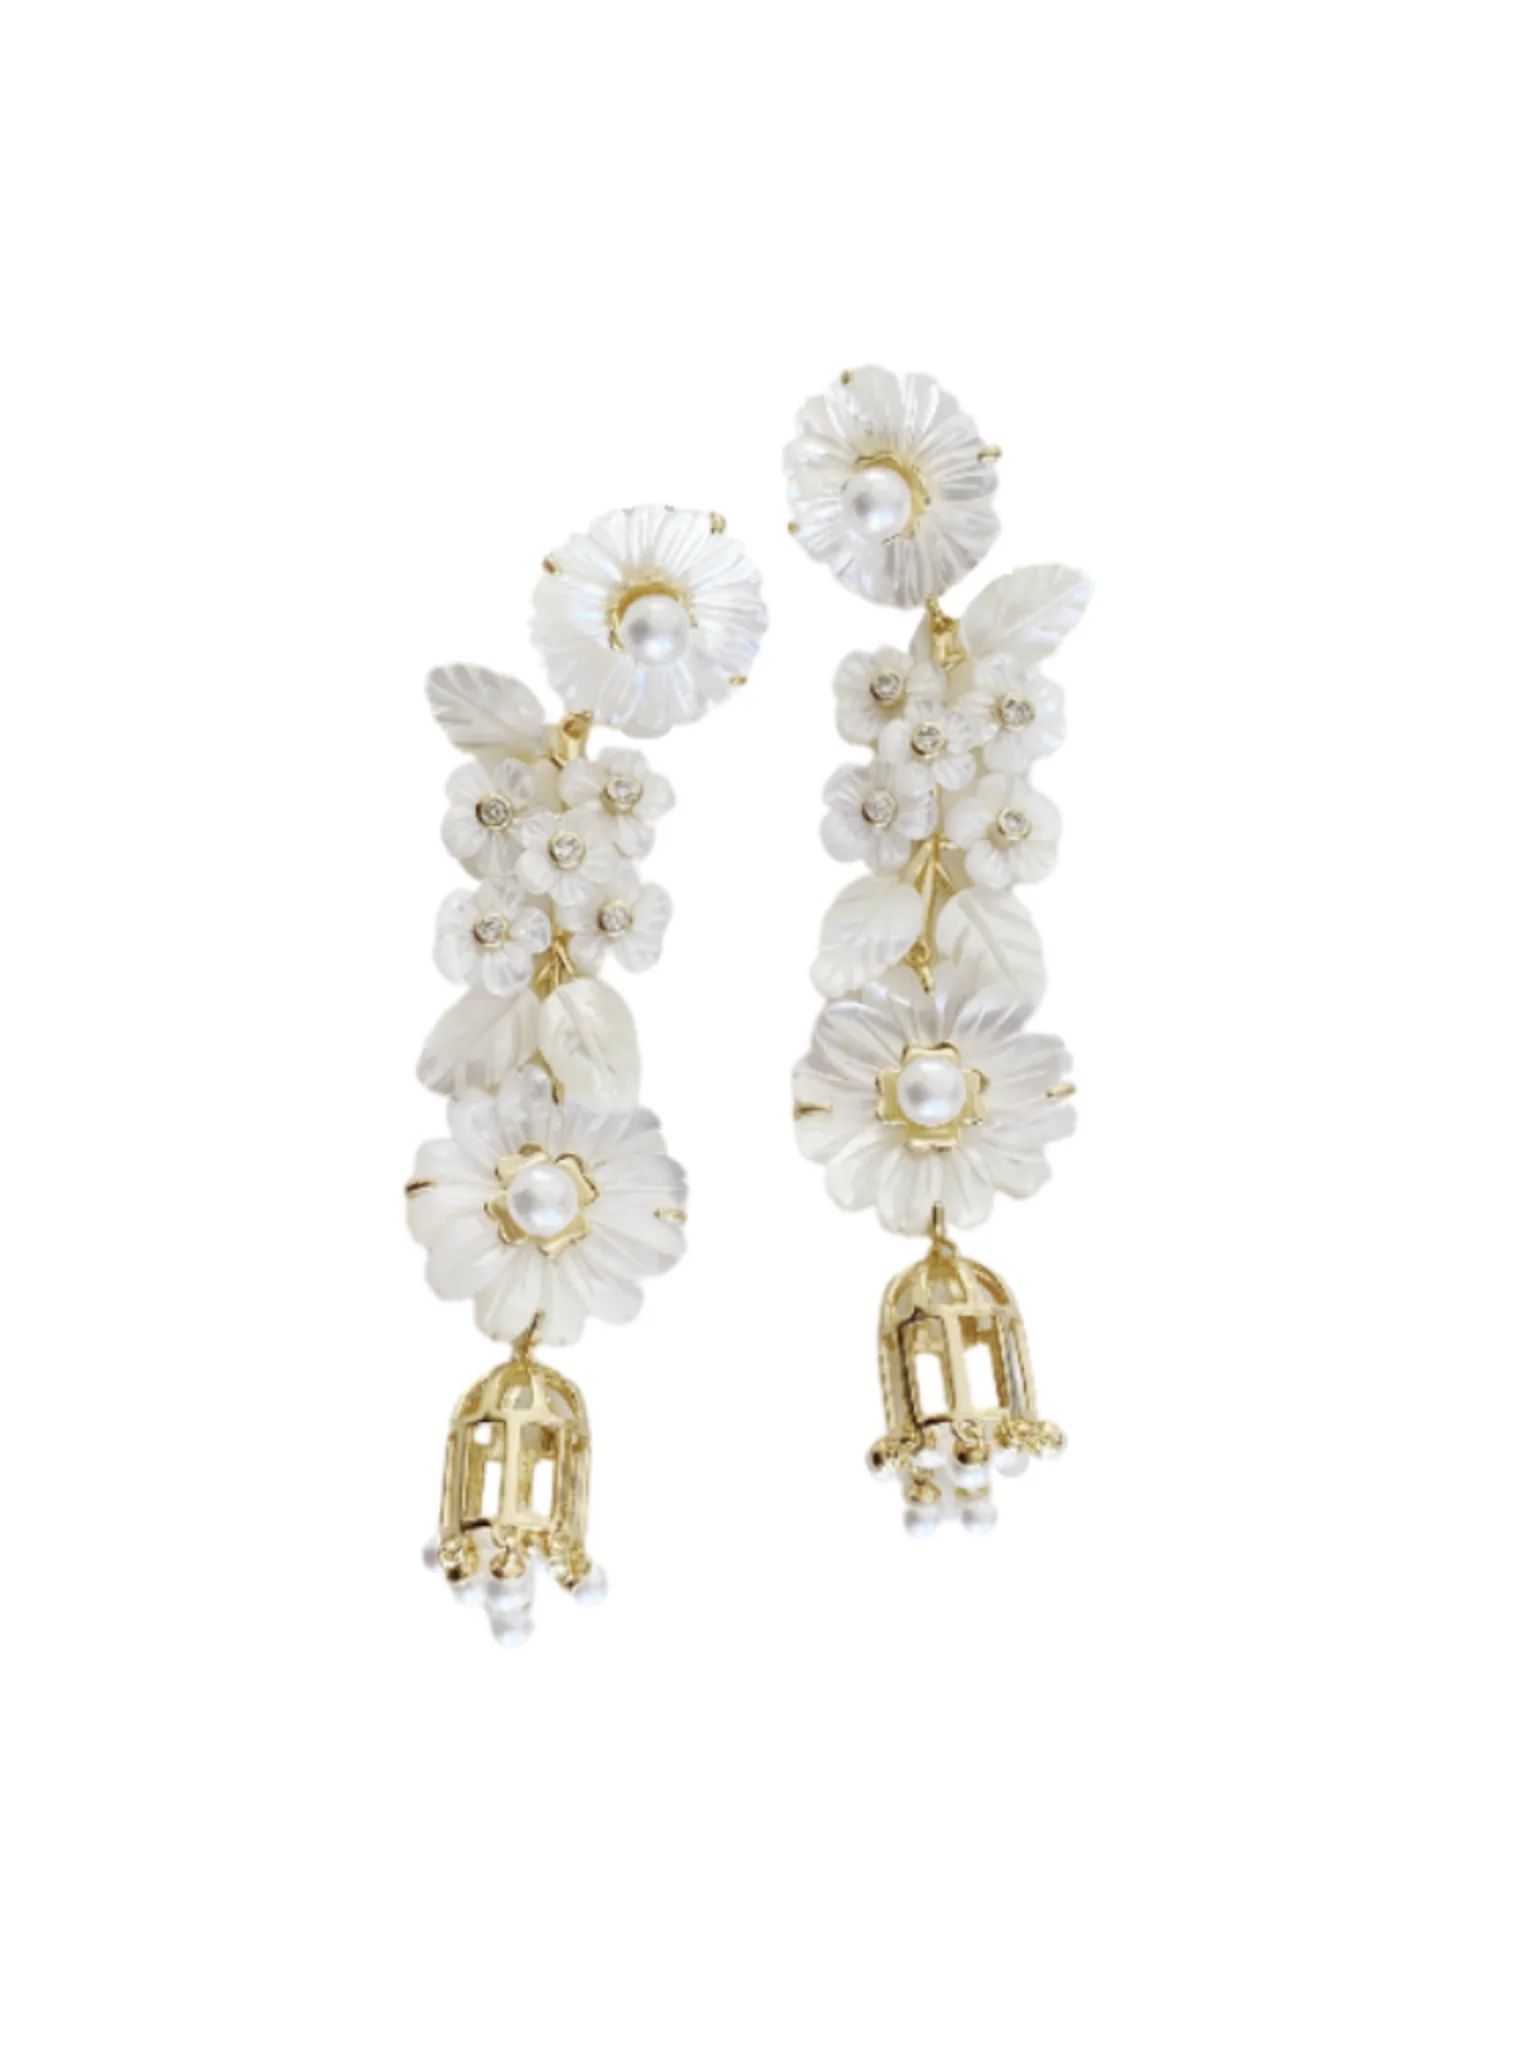 mother of pearl + pearl + bird cage earrings | Nicola Bathie Jewelry